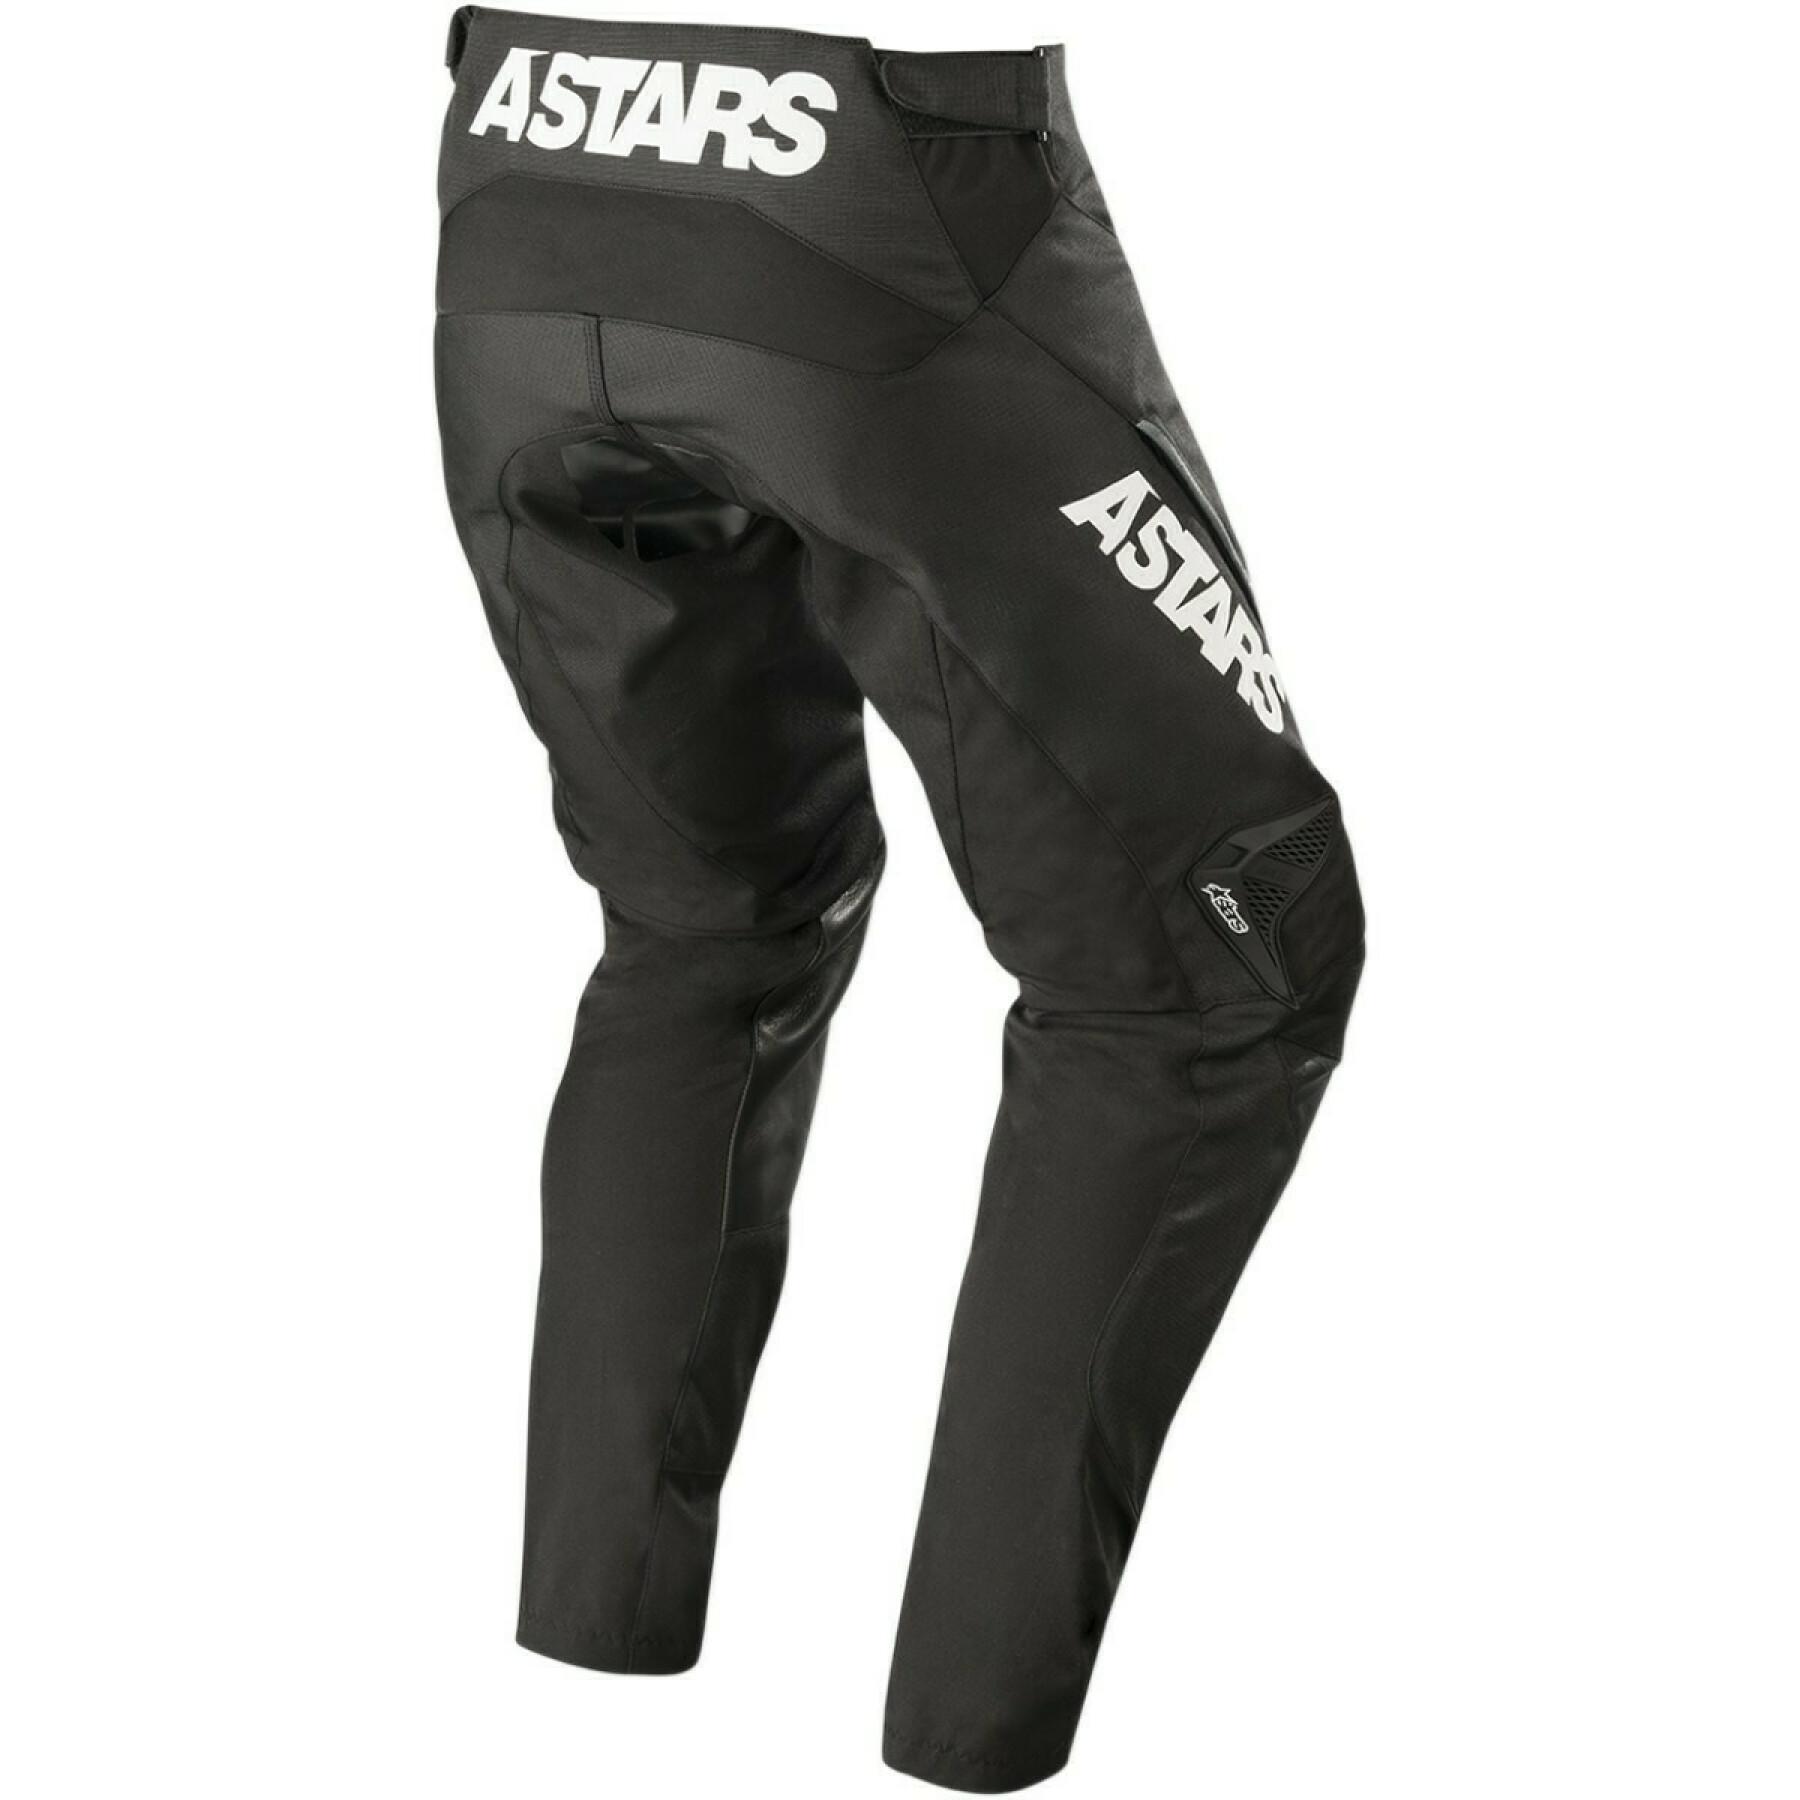 Pantalones cruzados de moto Alpinestars venture-R